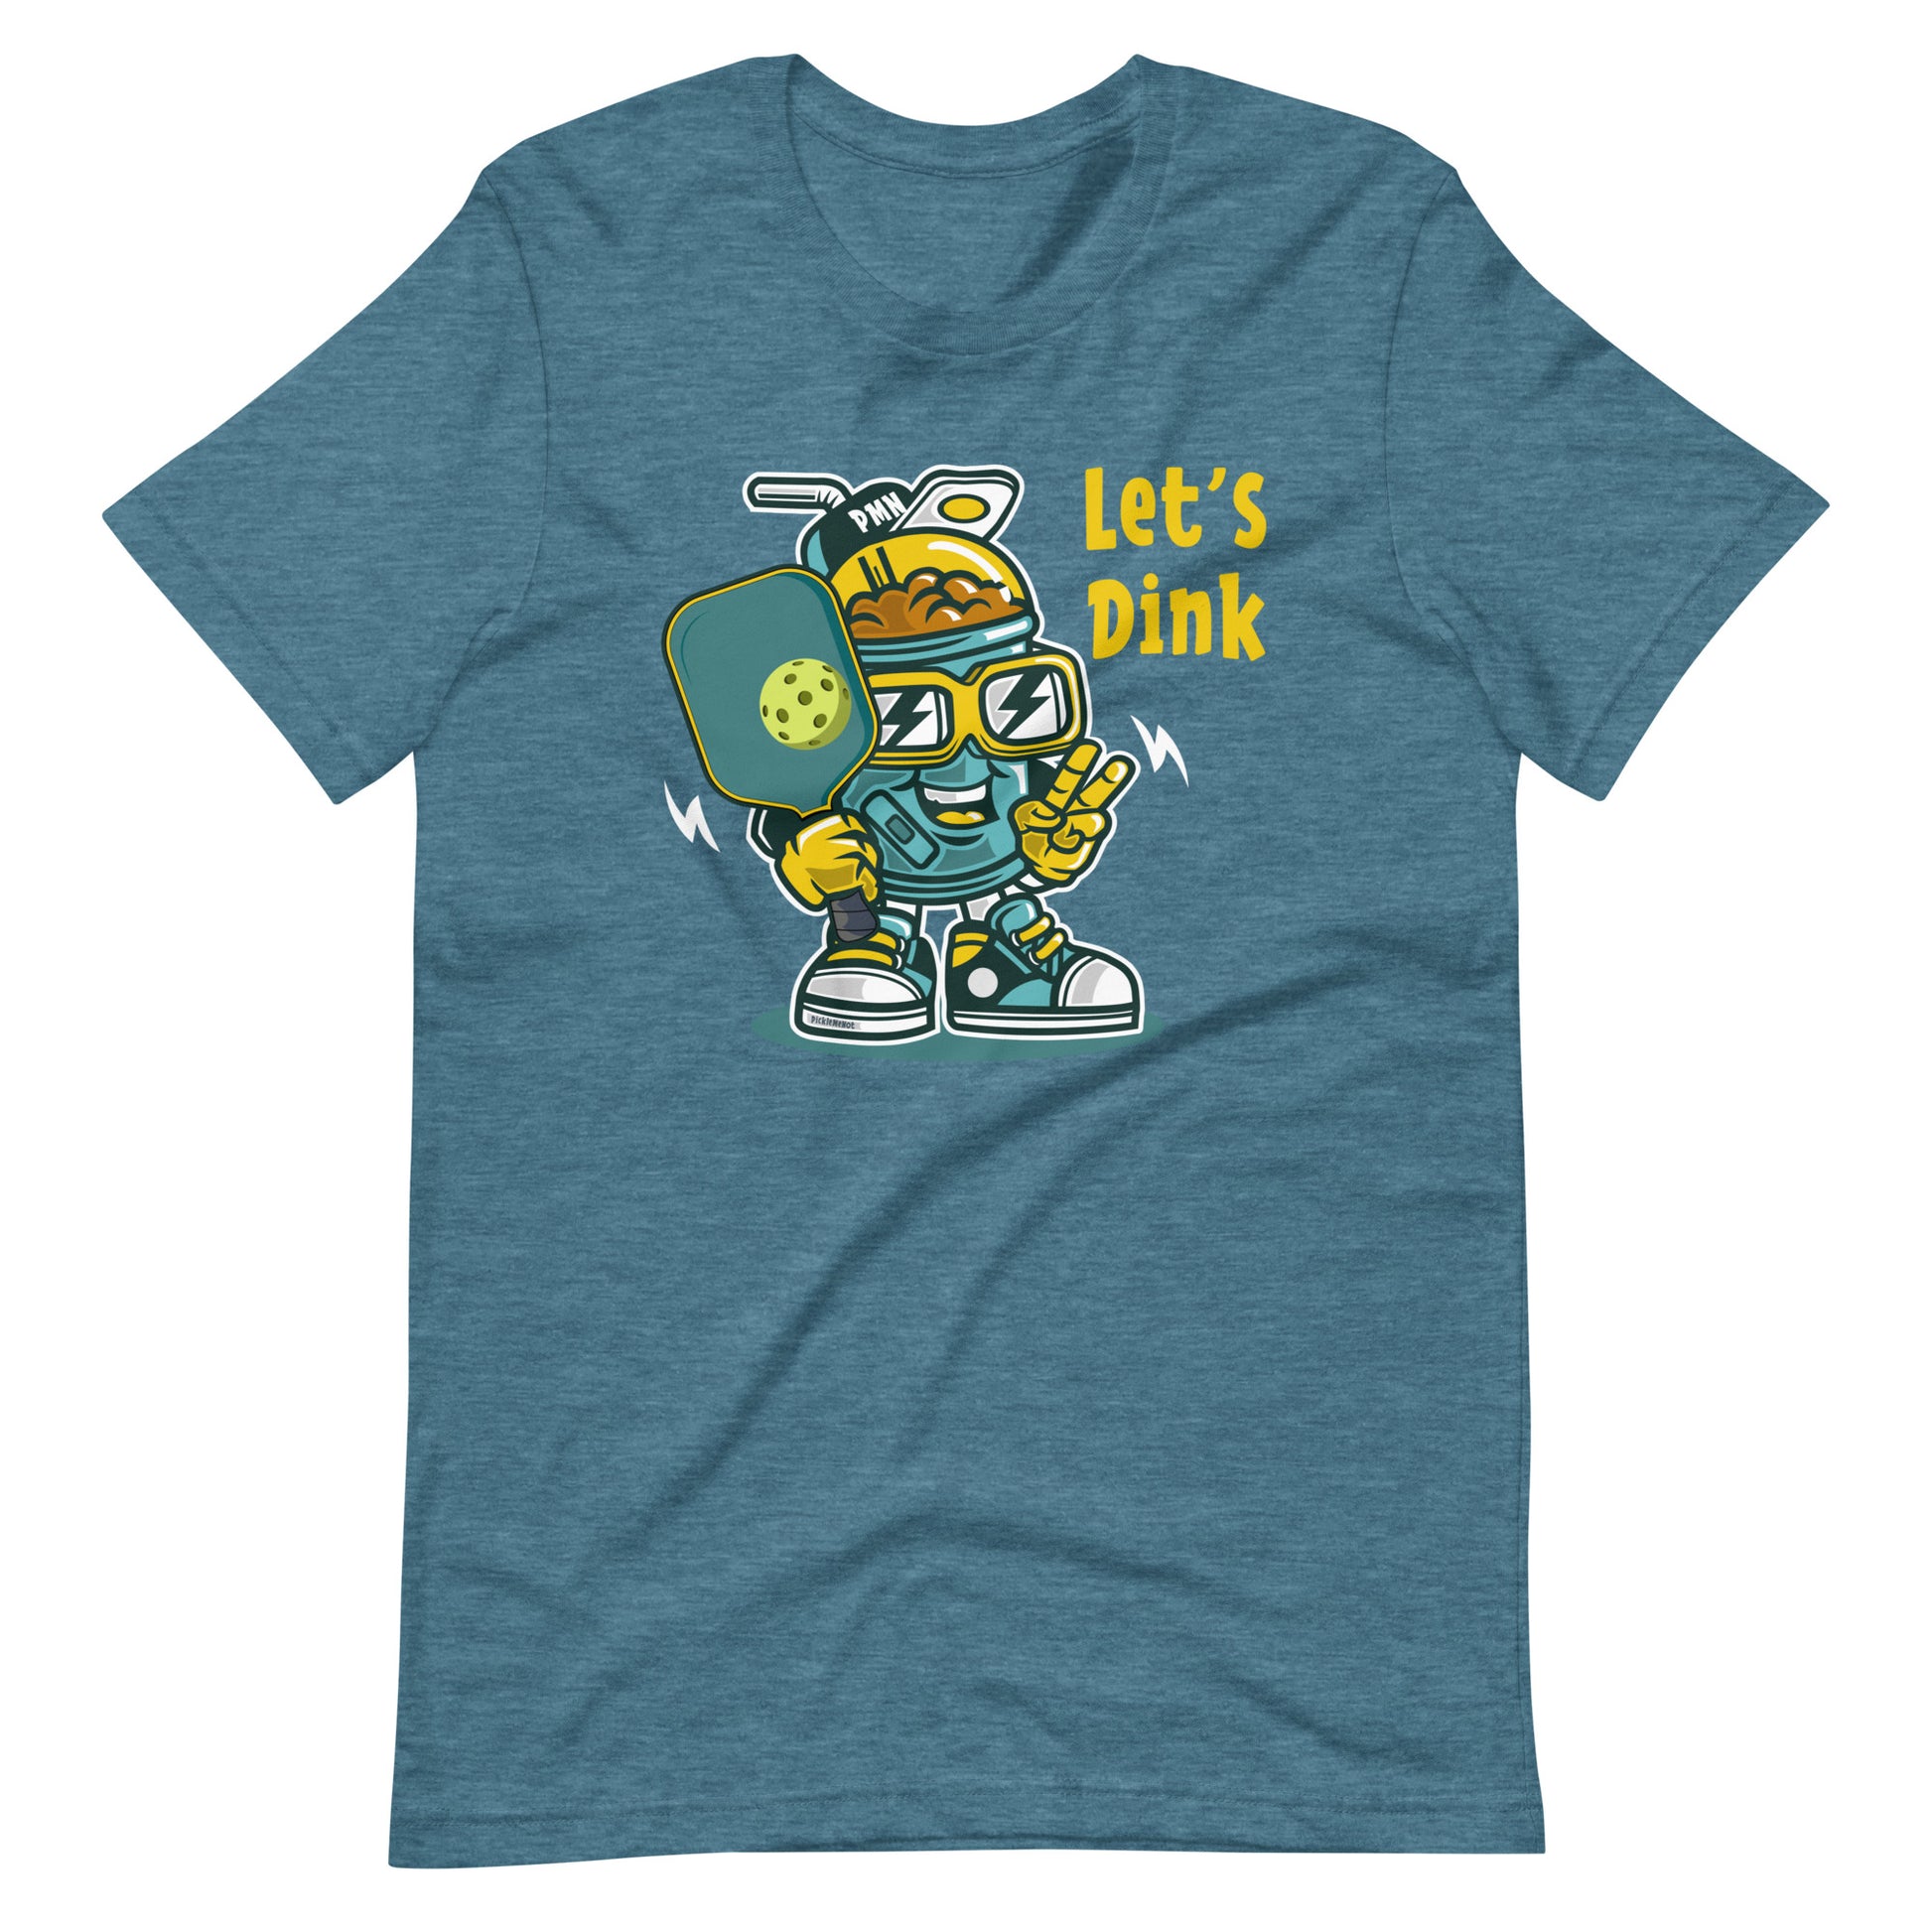 Retro-Vintage Fun Pickleball , "Let's Dink" Unisex Women's Teal T-Shirt